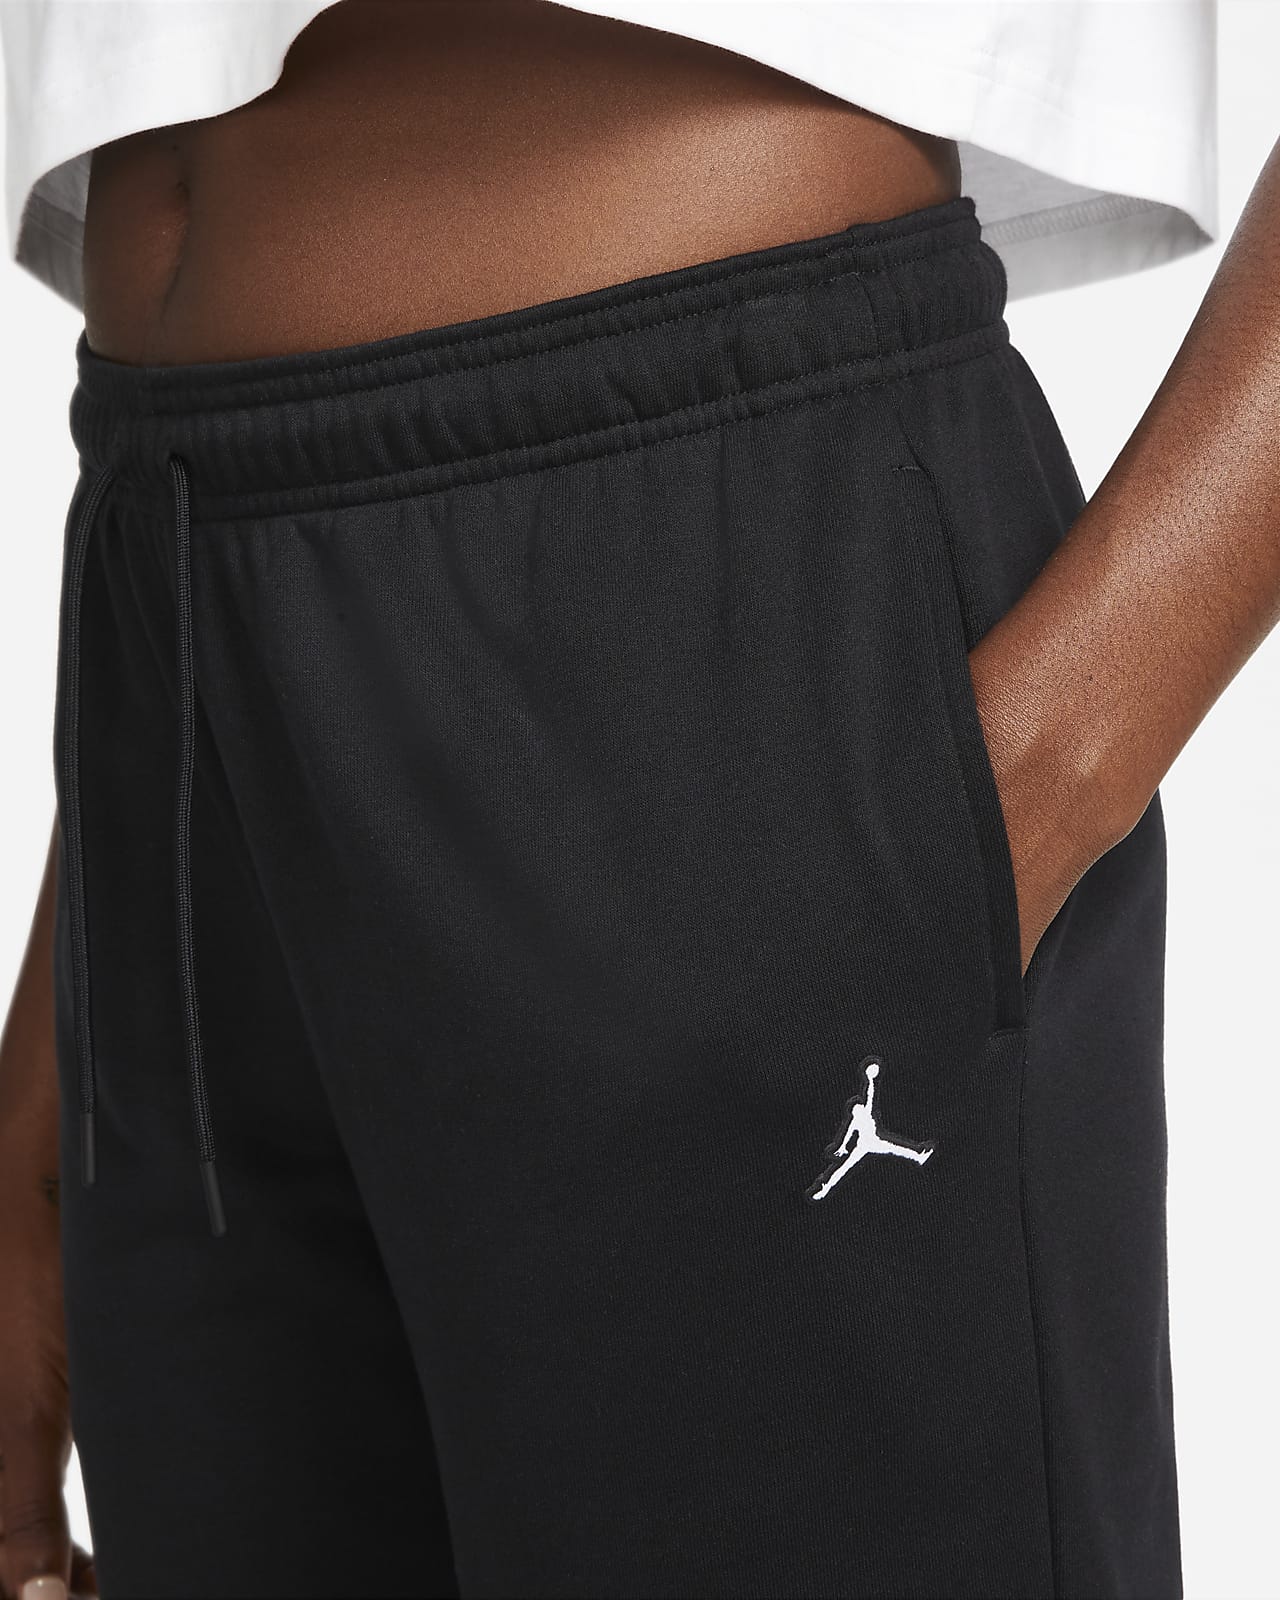 Nike Starting 5 Men's Basketball Trousers. Nike LU